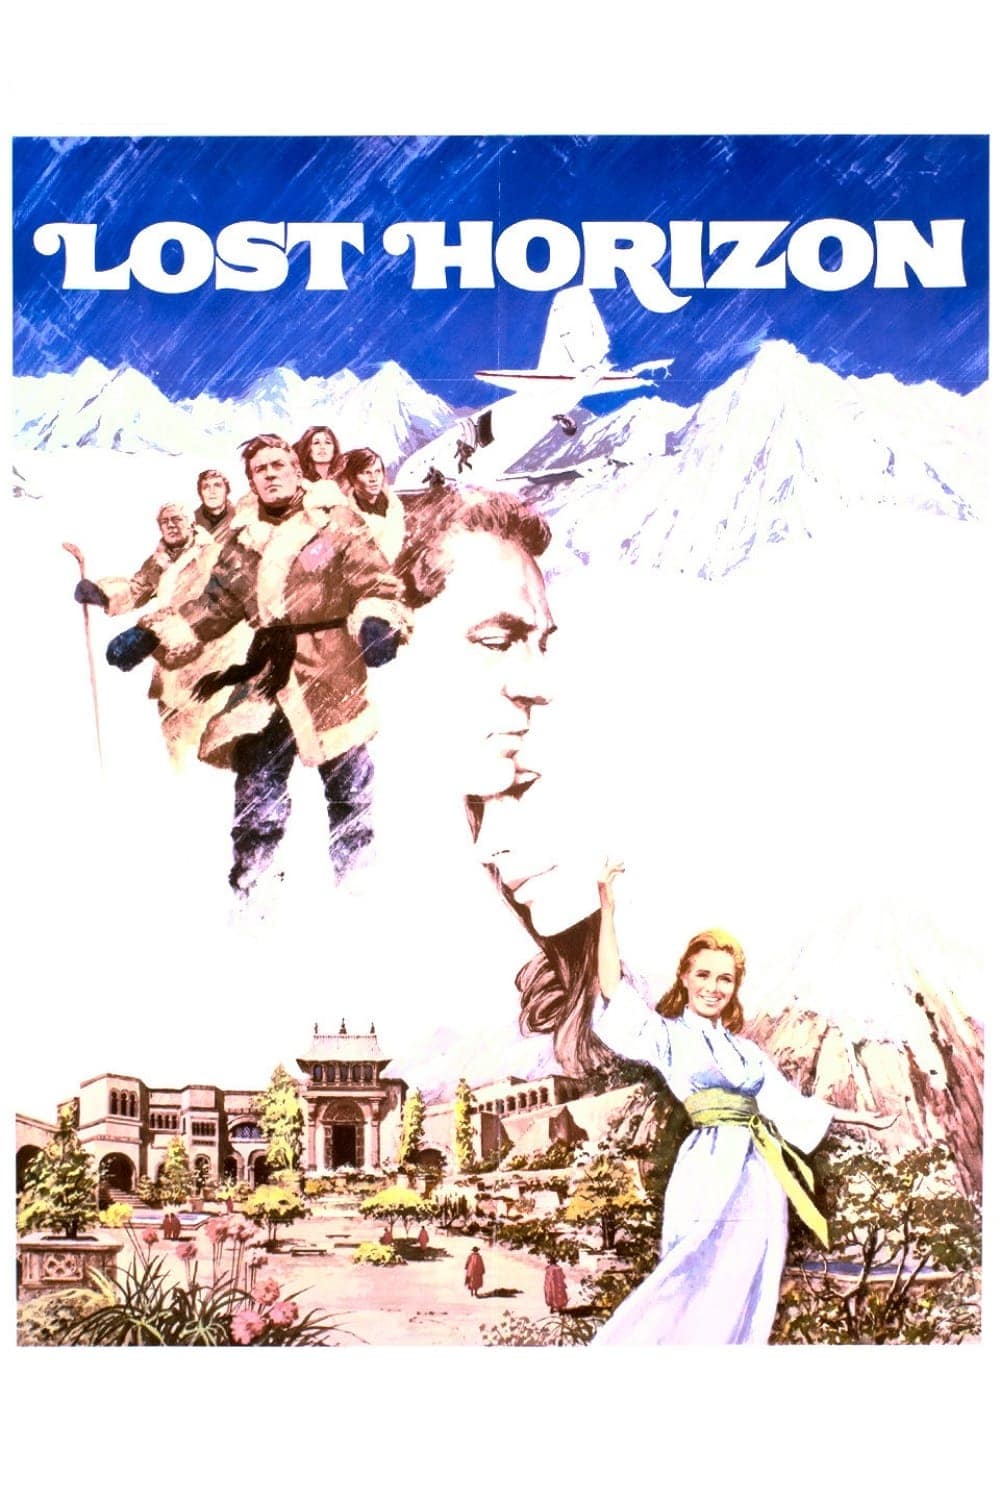 last horizon movie